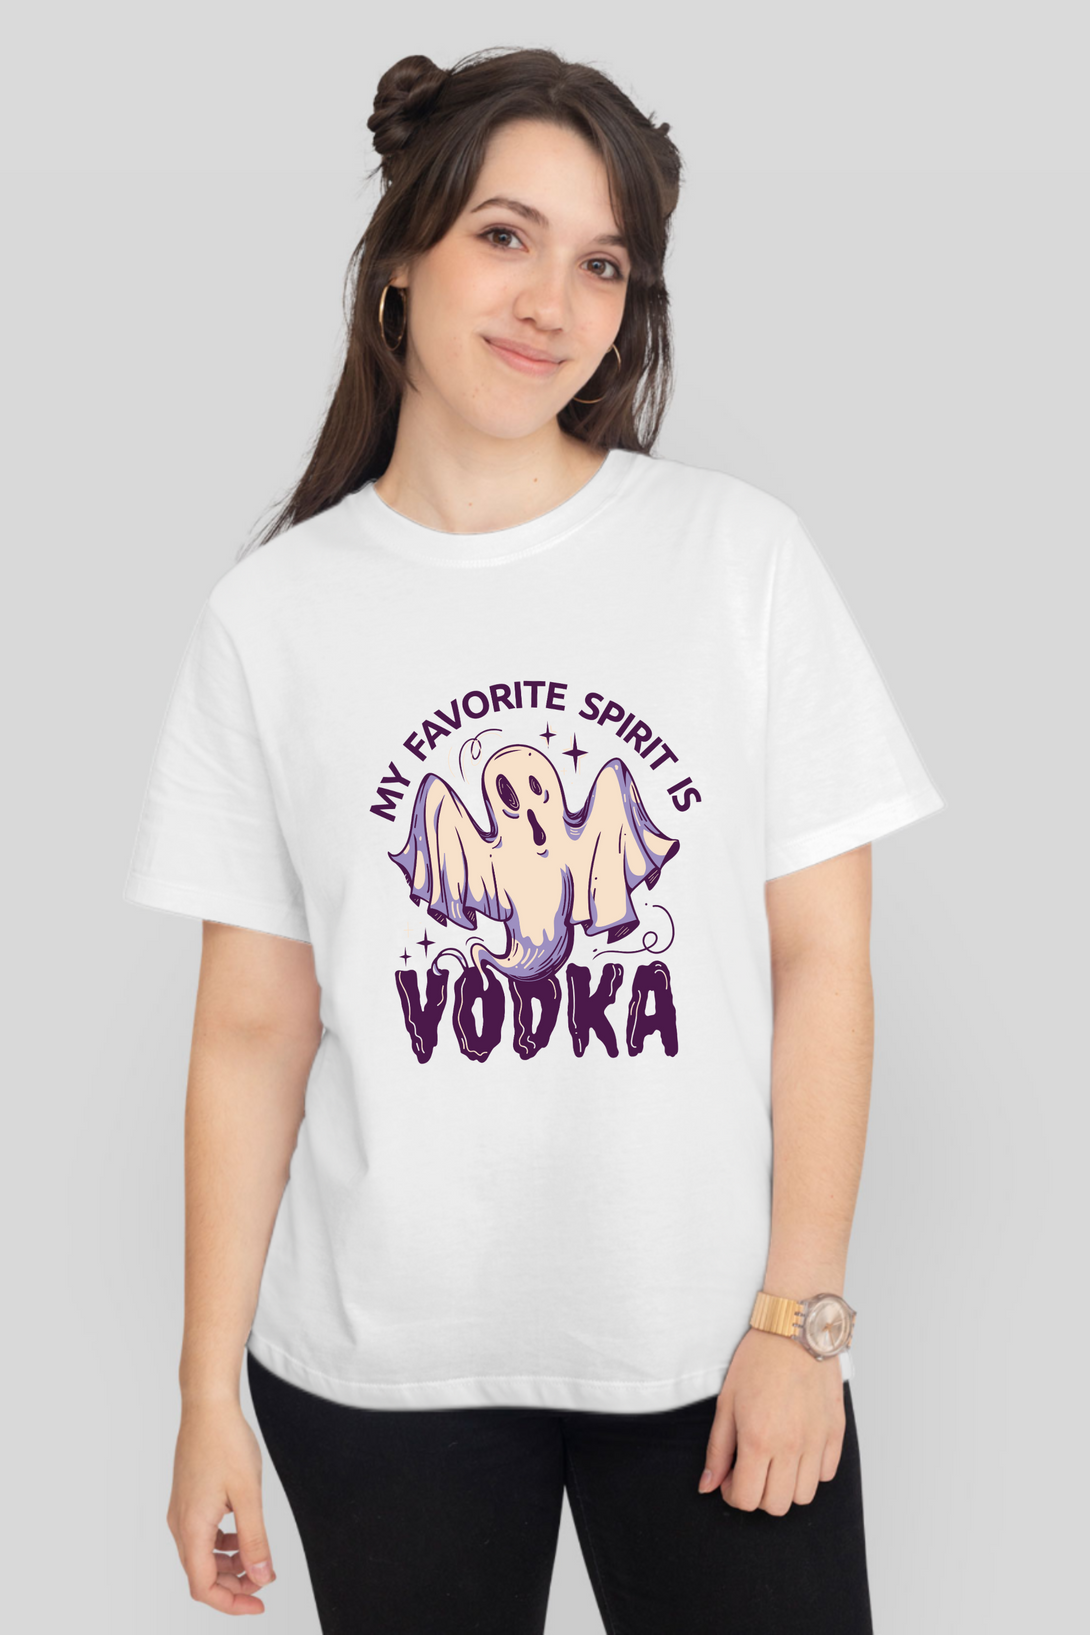 My Favourite Spirit Is Vodka Printed T-Shirt For Women - WowWaves - 11